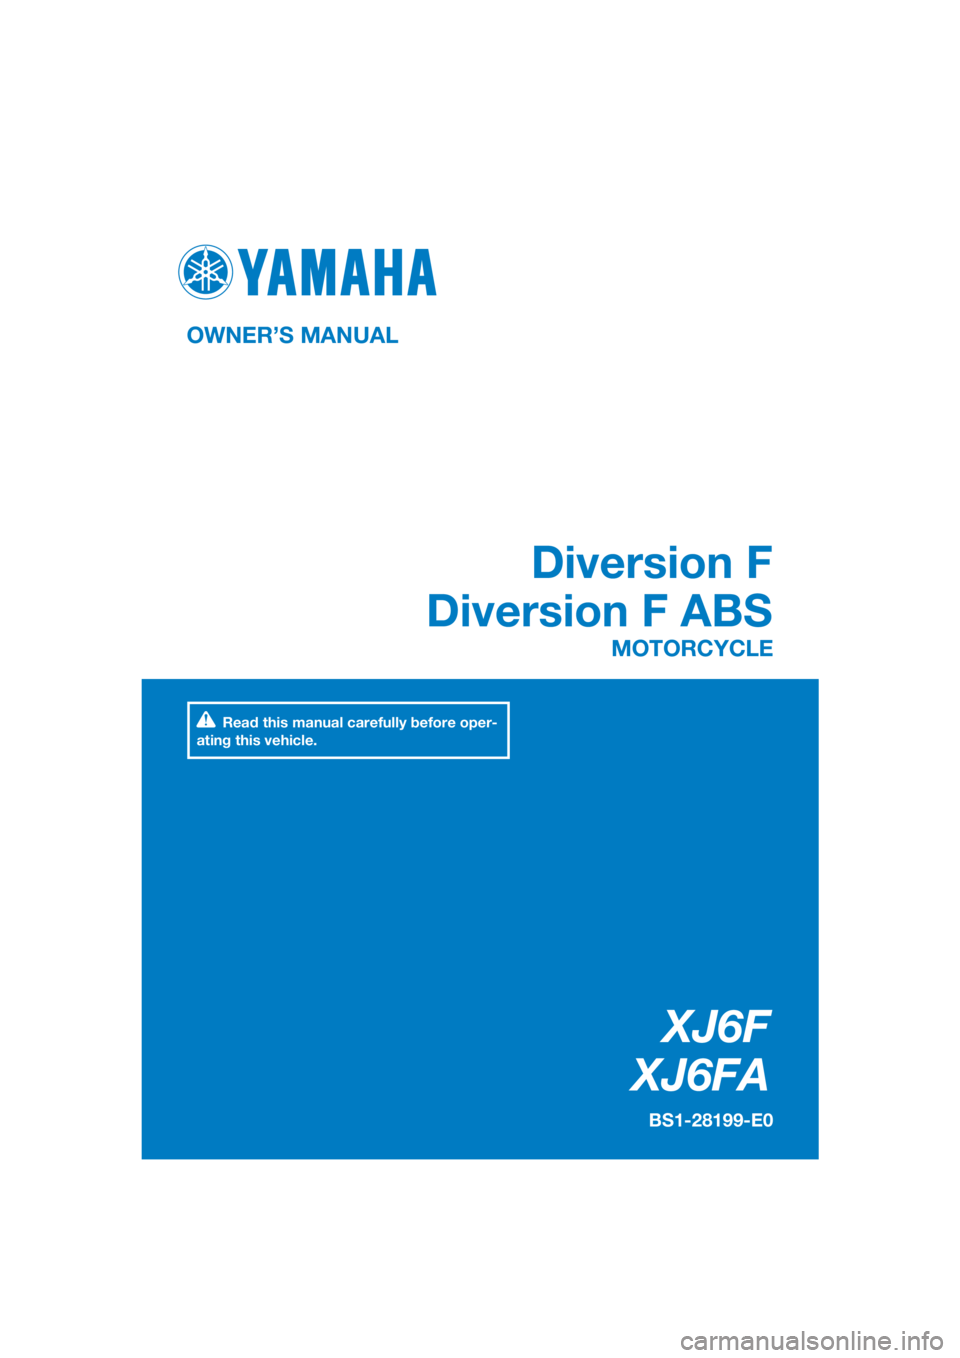 YAMAHA XJ6F 2016  Owners Manual DIC183
XJ6F
XJ6FA
Diversion F
Diversion F ABS
OWNER’S MANUAL
BS1-28199-E0
MOTORCYCLE
[English  (E)]
Read this manual carefully before oper-
ating this vehicle. 